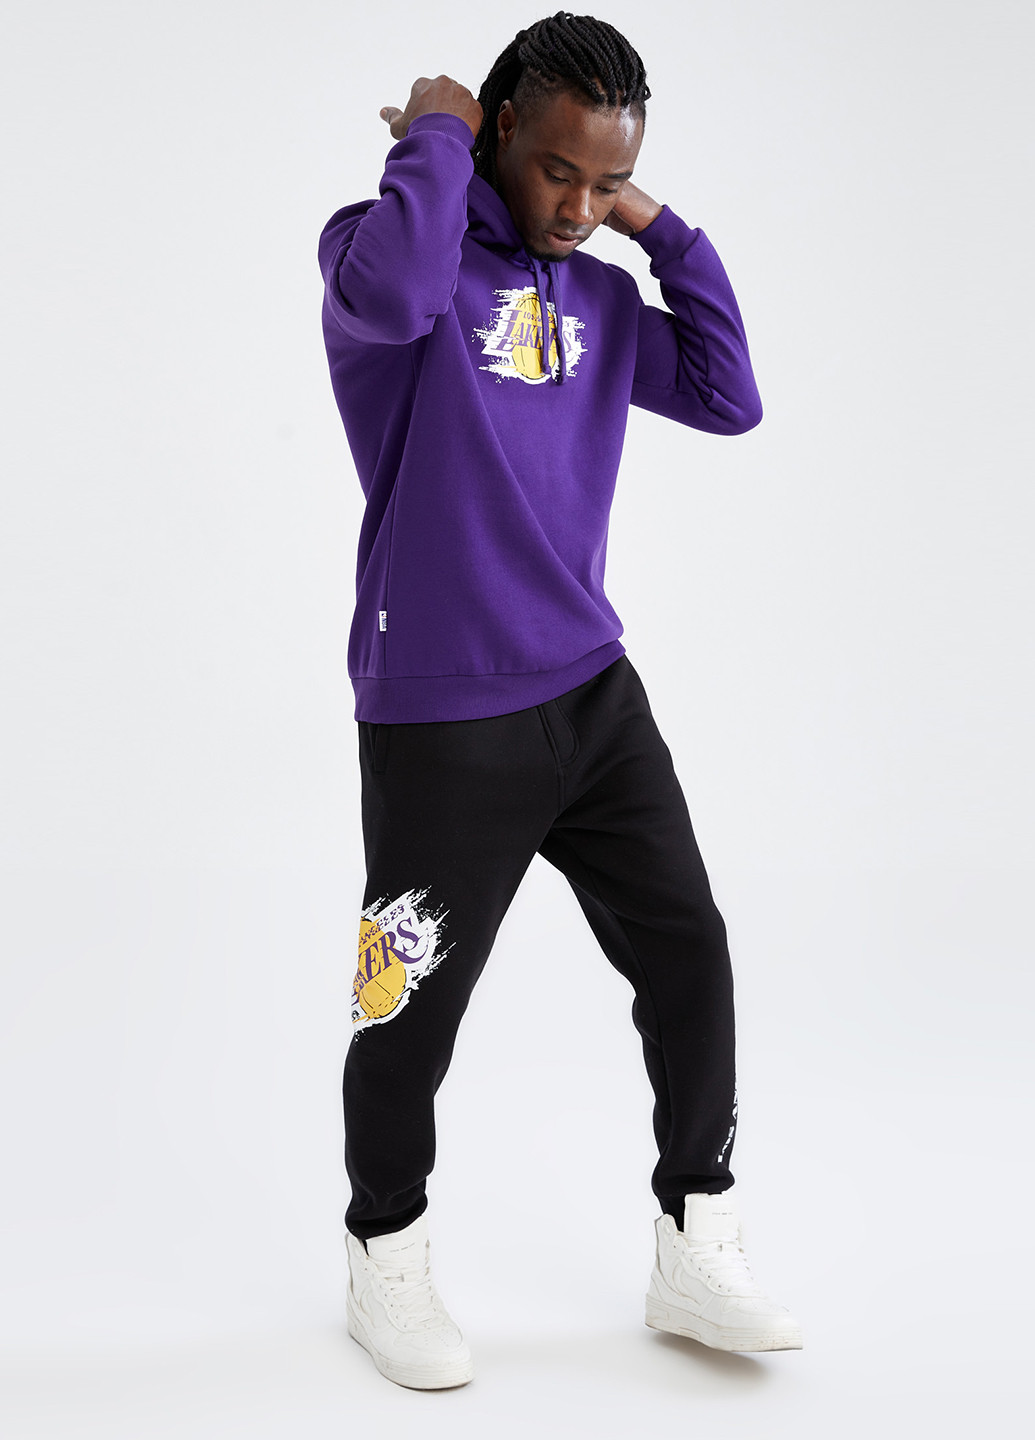 Джогери Los Angeles Lakers DeFacto Джогеры джогери малюнки чорні кежуали бавовна, трикотаж